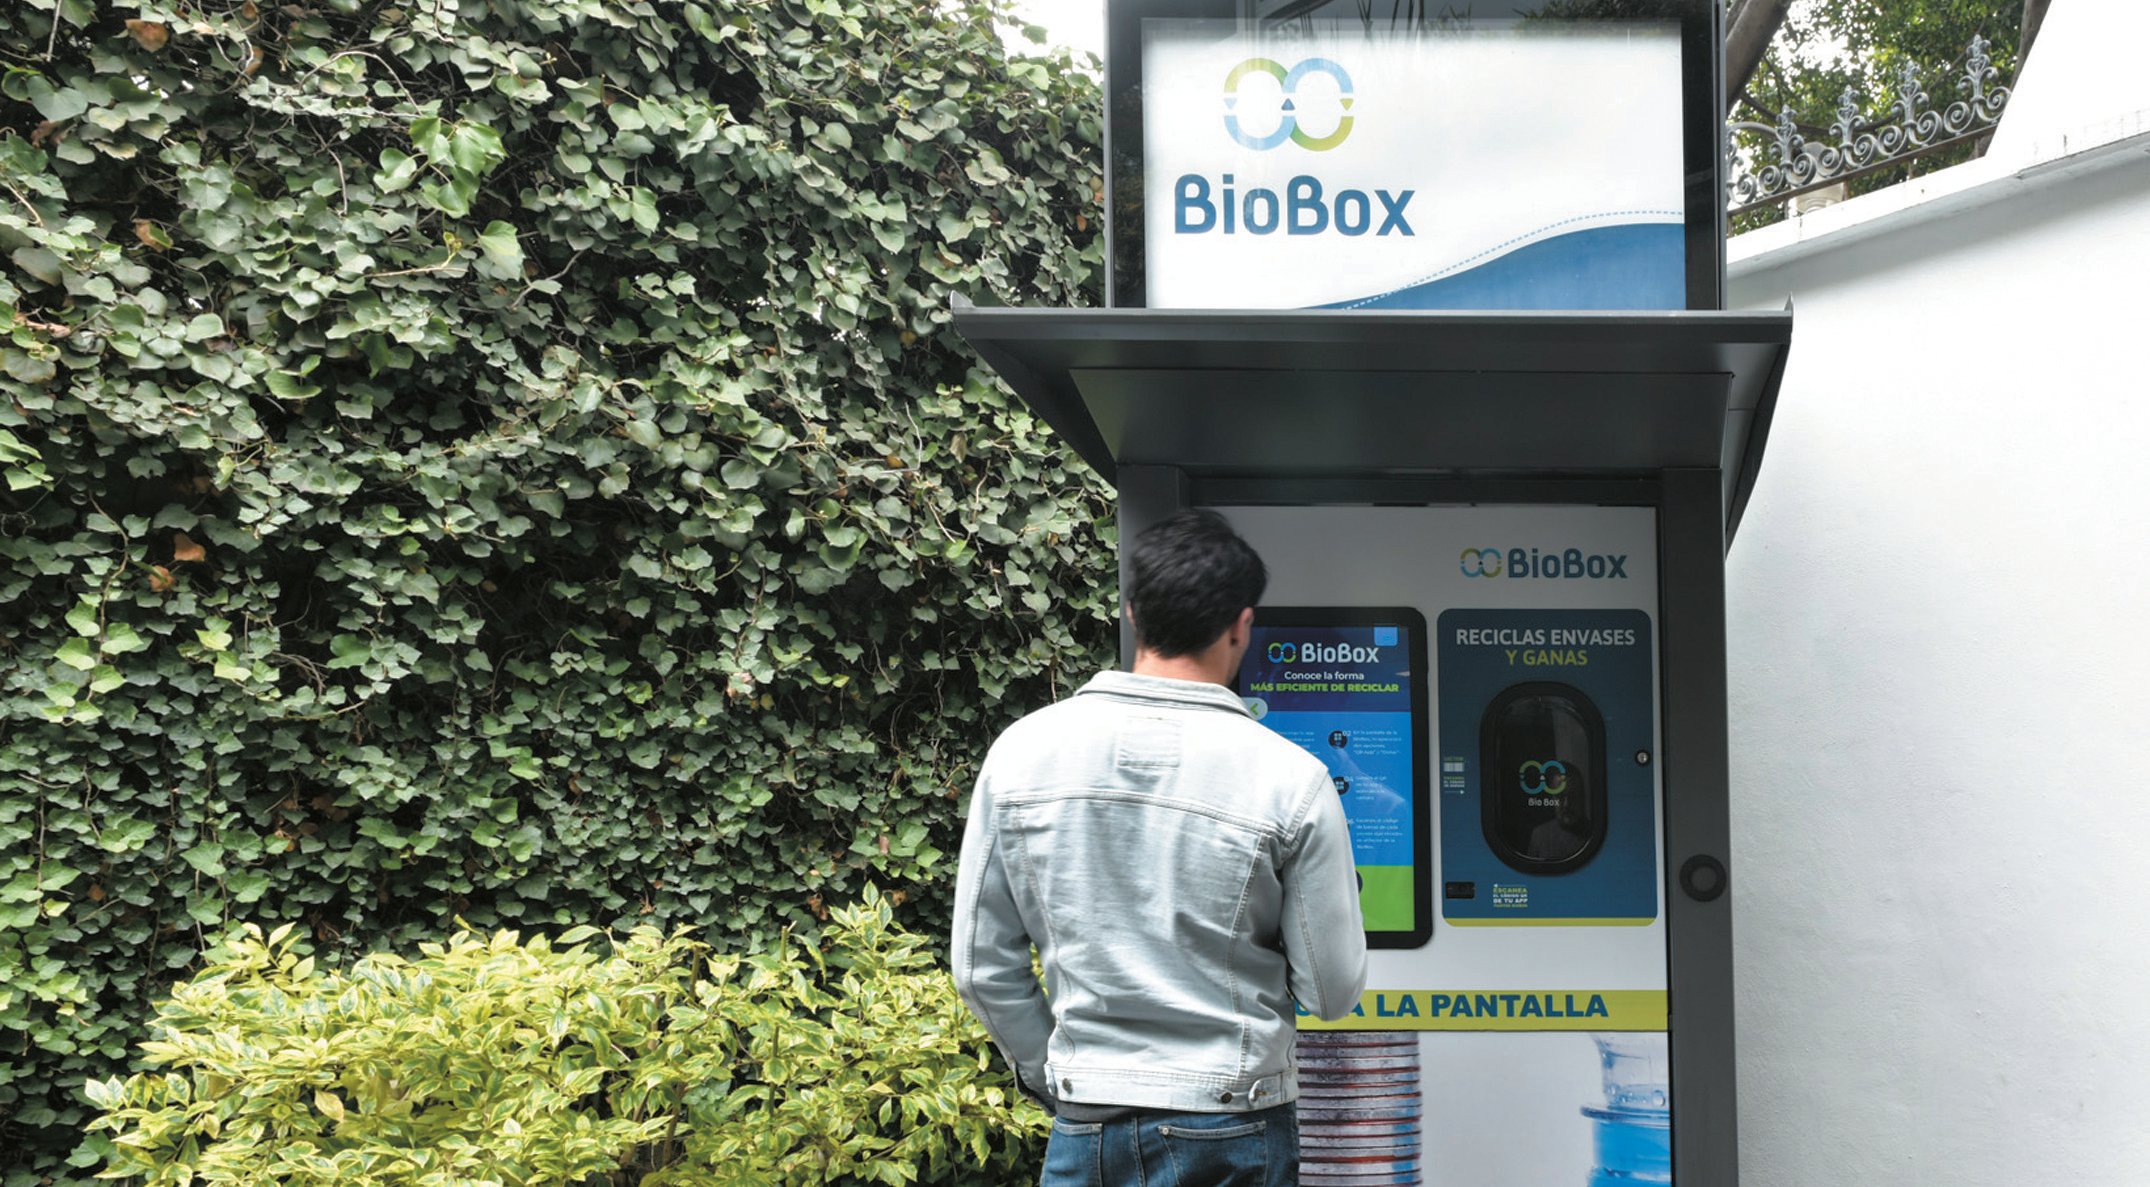 Biobox